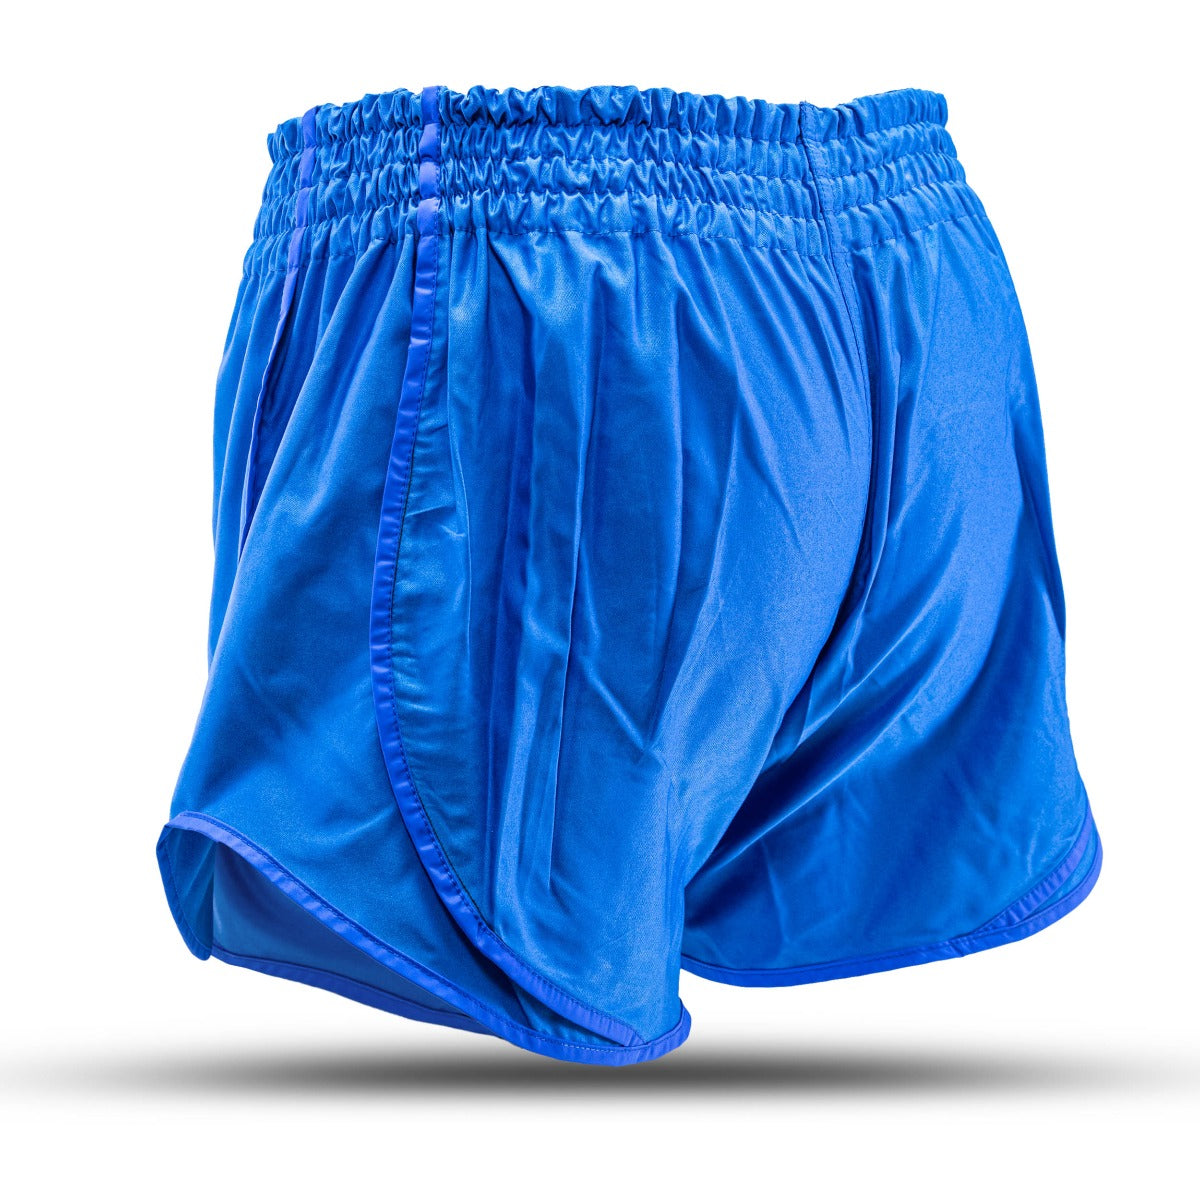 King PRO boxing muay Thai trunk - KPB CLASSIC COBALT BLUE